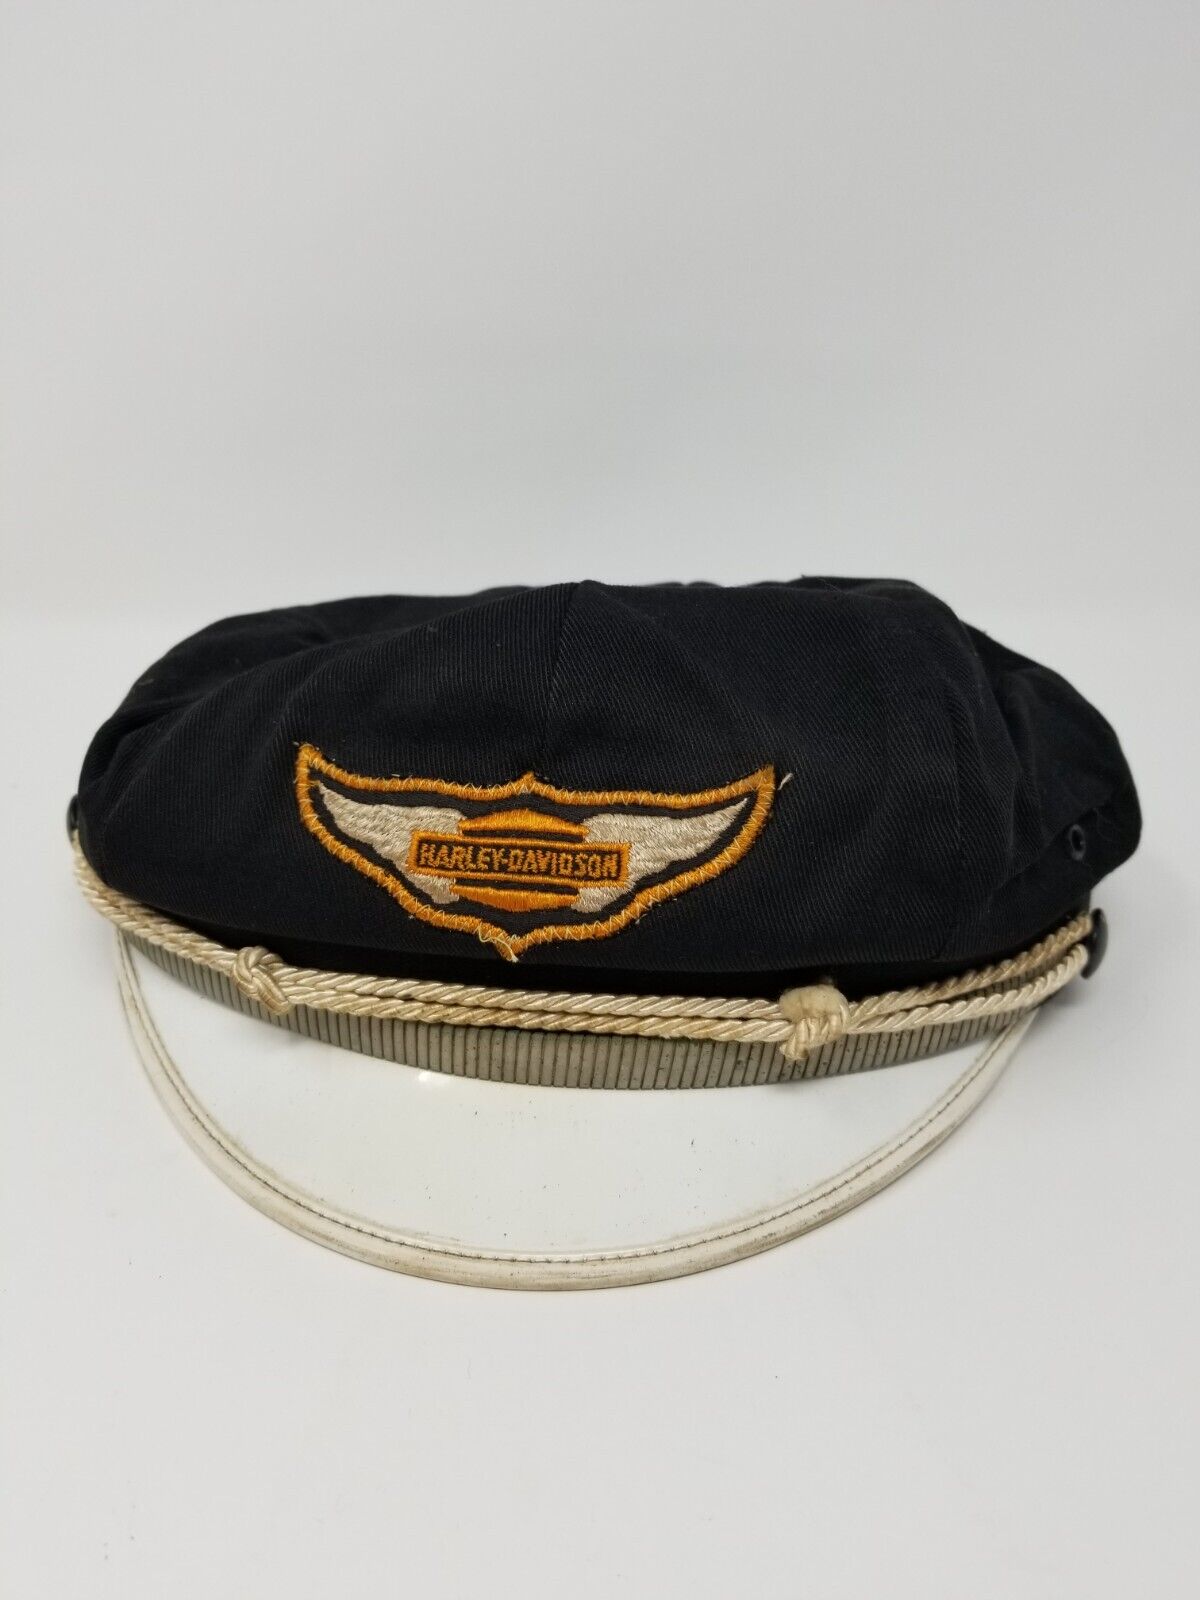 VTG 40s 50 Harley Davidson Captain's Hat - Great Shape No Size - Silver Band